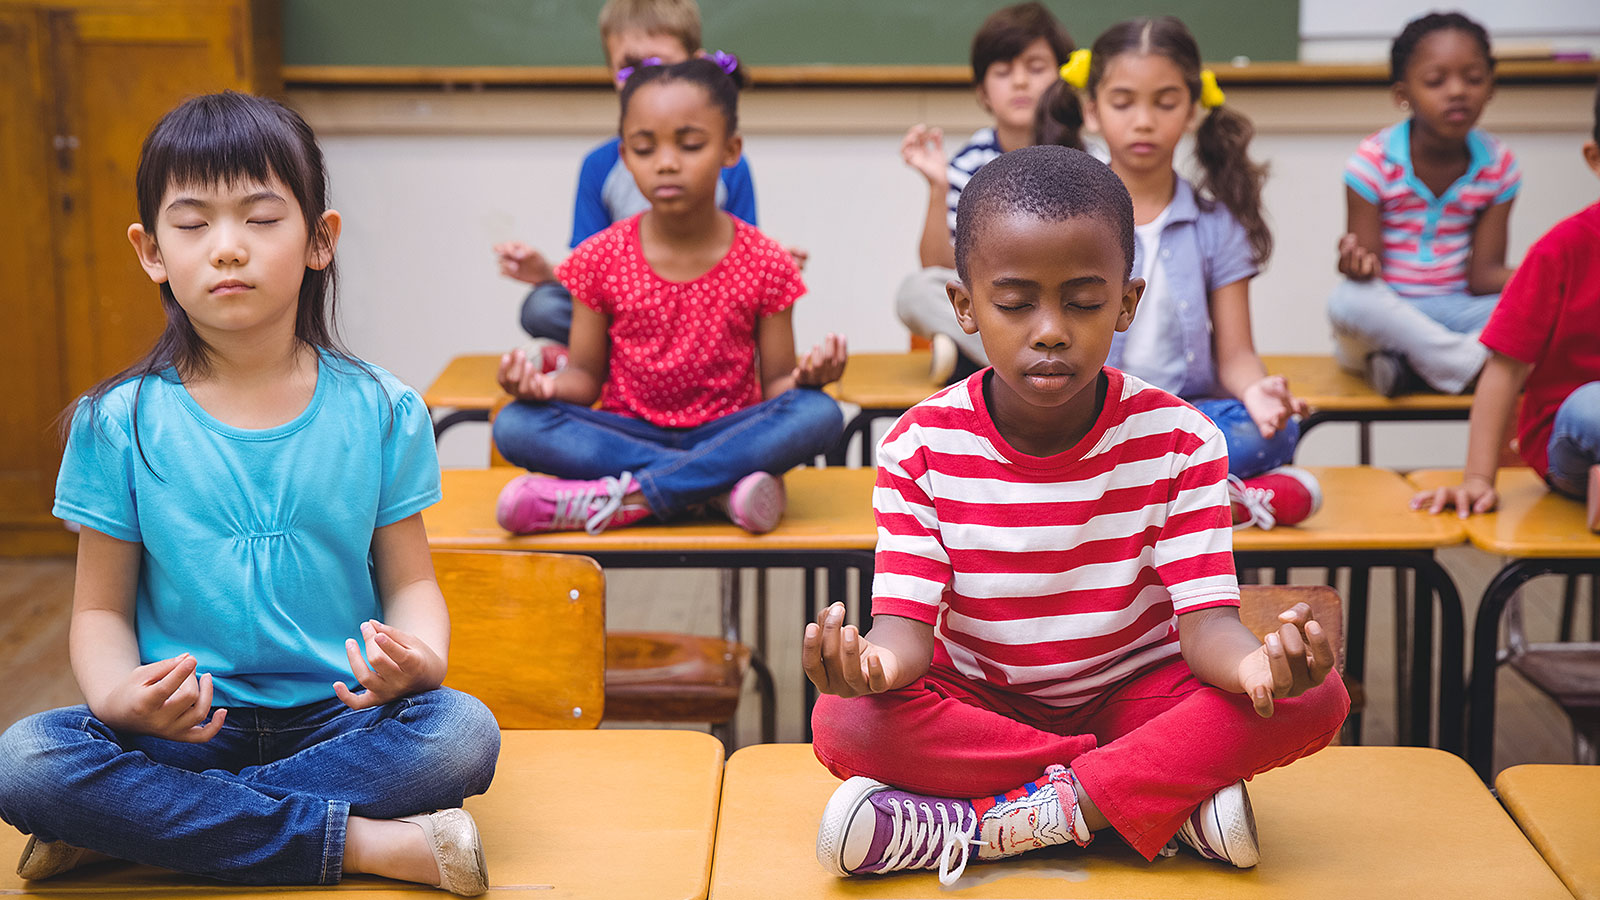 teachers-parents-want-children-to-meditate-in-school-for-mental-health-ladders.jpg